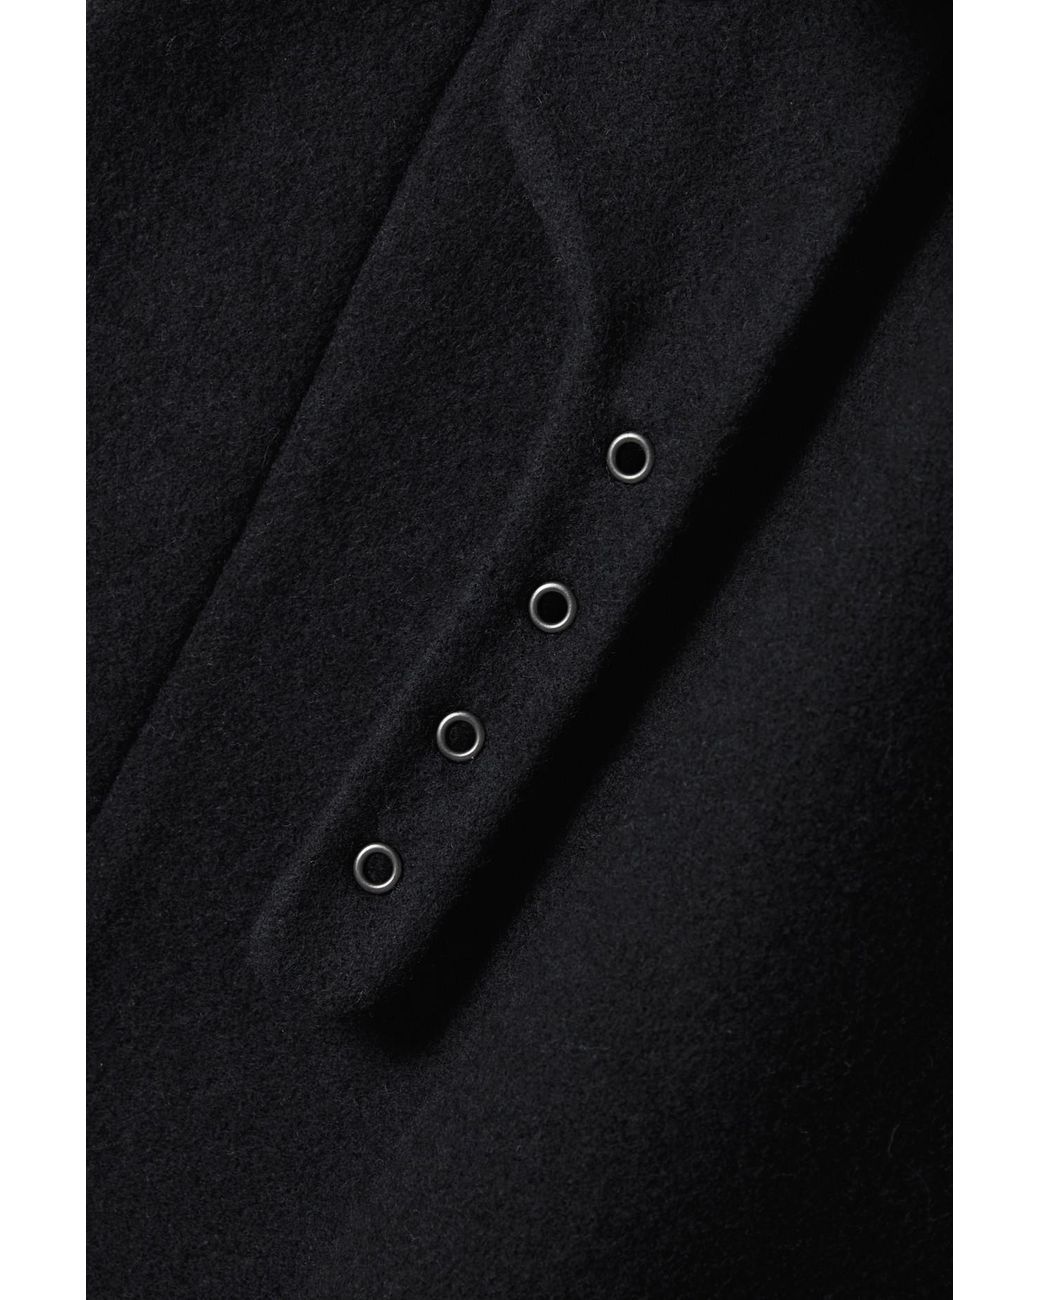 Tibi Belted Wool-blend Coat in Black | Lyst